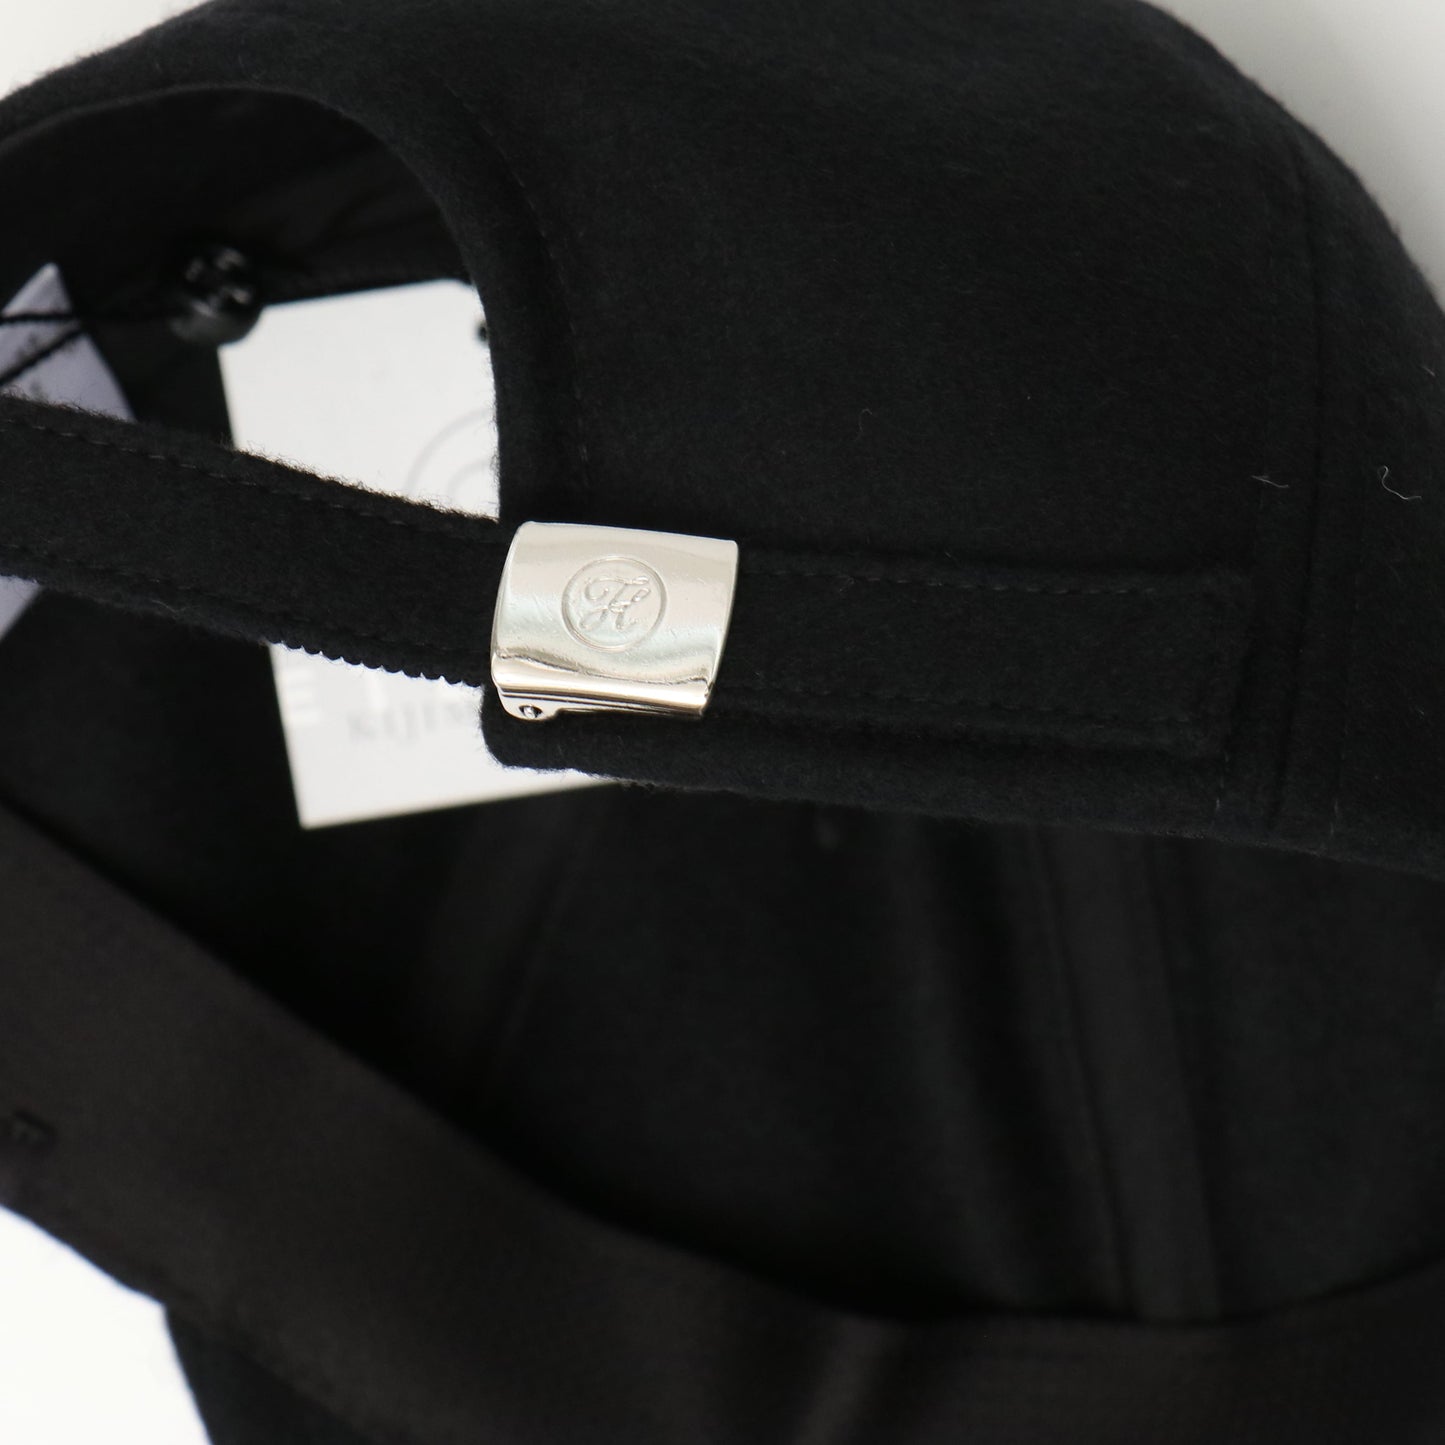 MELTON 6 PANEL CAP BLACK